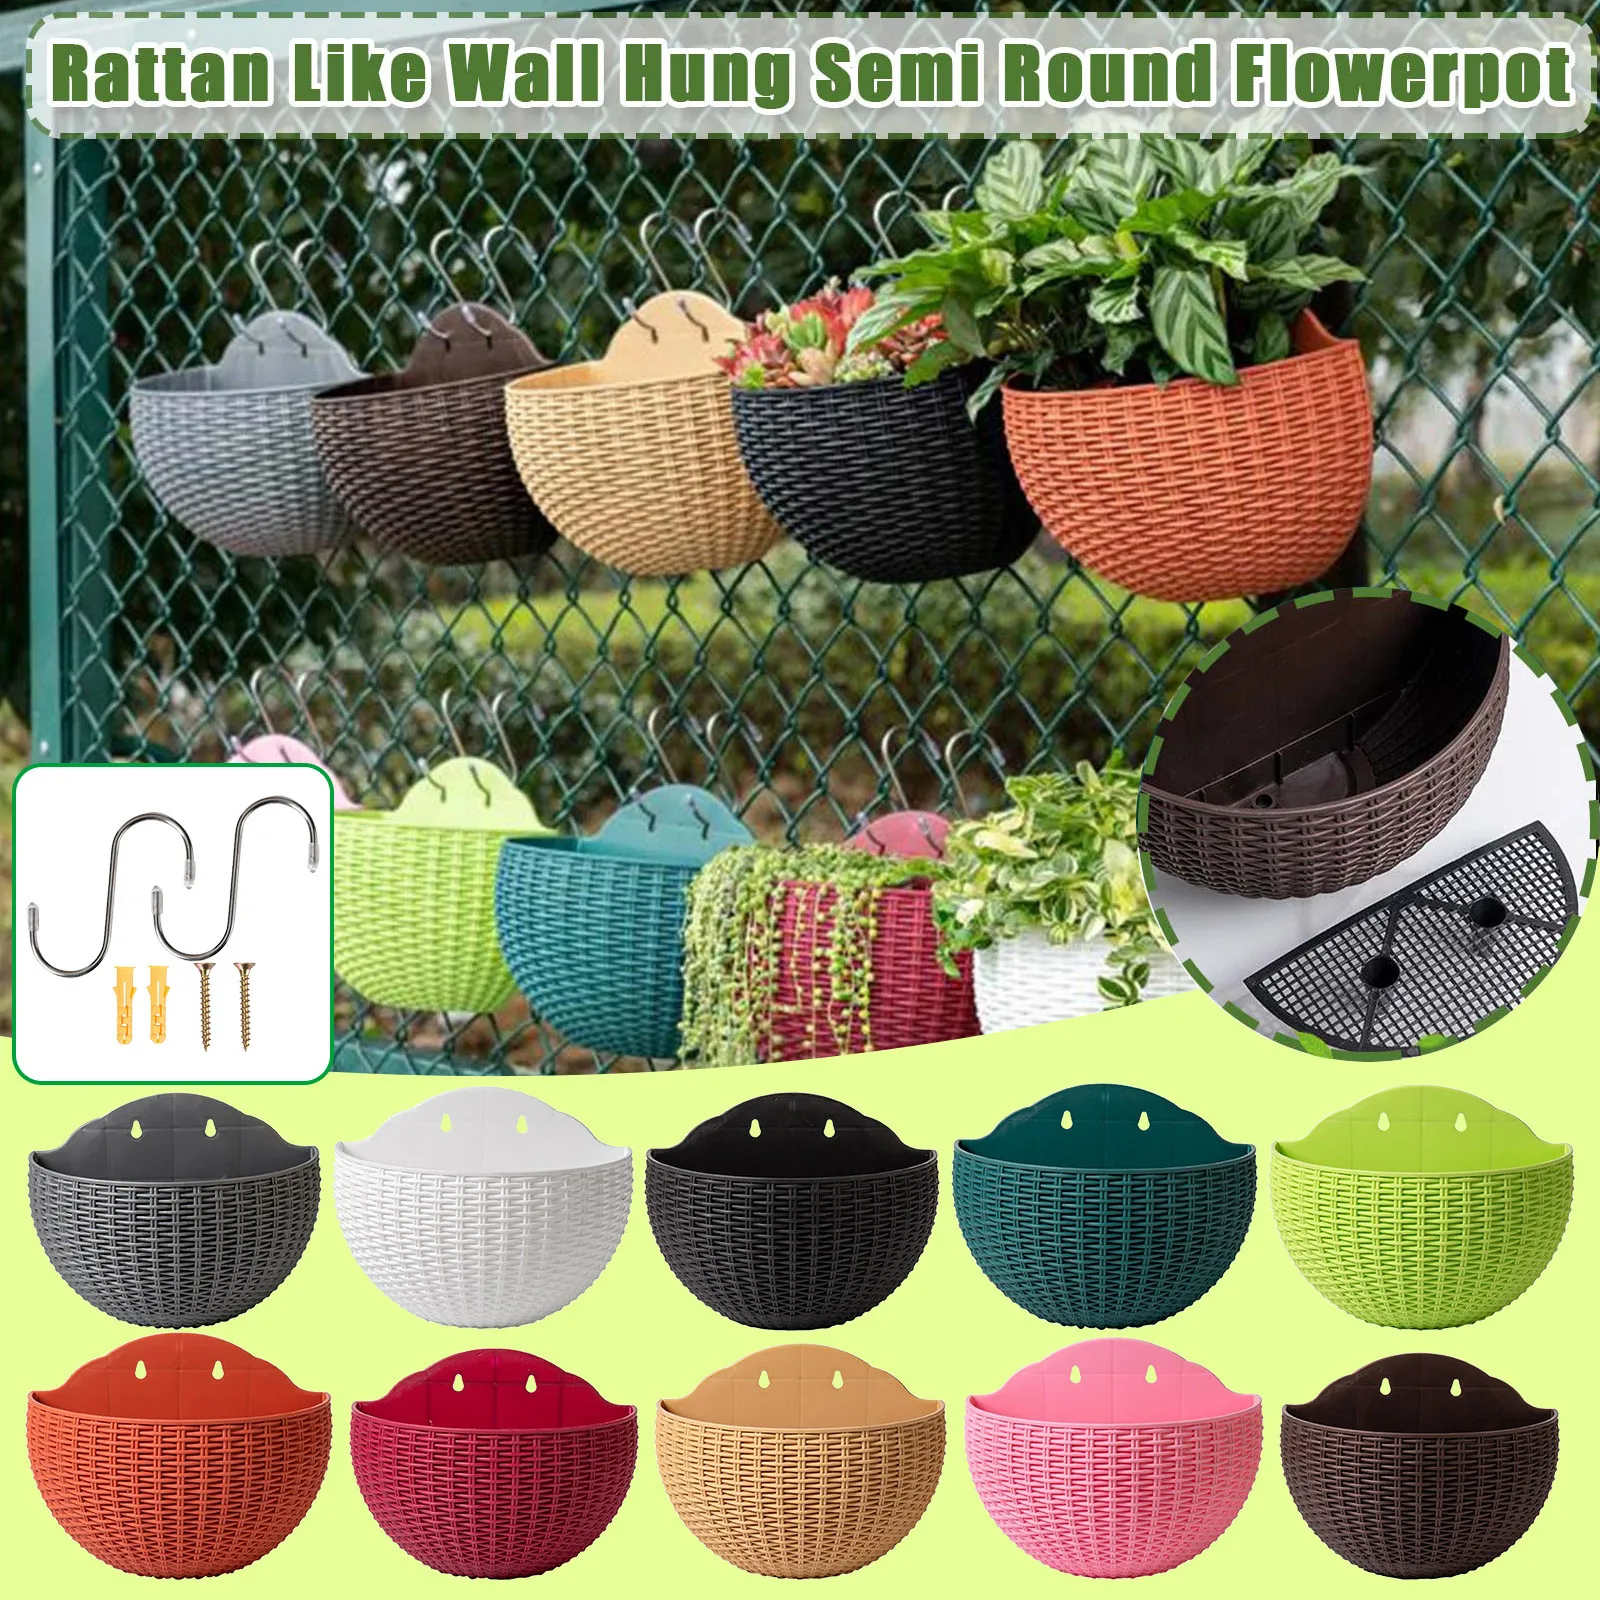 2pcs Hot Hanging flower basket Garden Party Handmade DIY Vase Sundries Organizer Wall Hanging Artificial Rattan Home Decor Pots